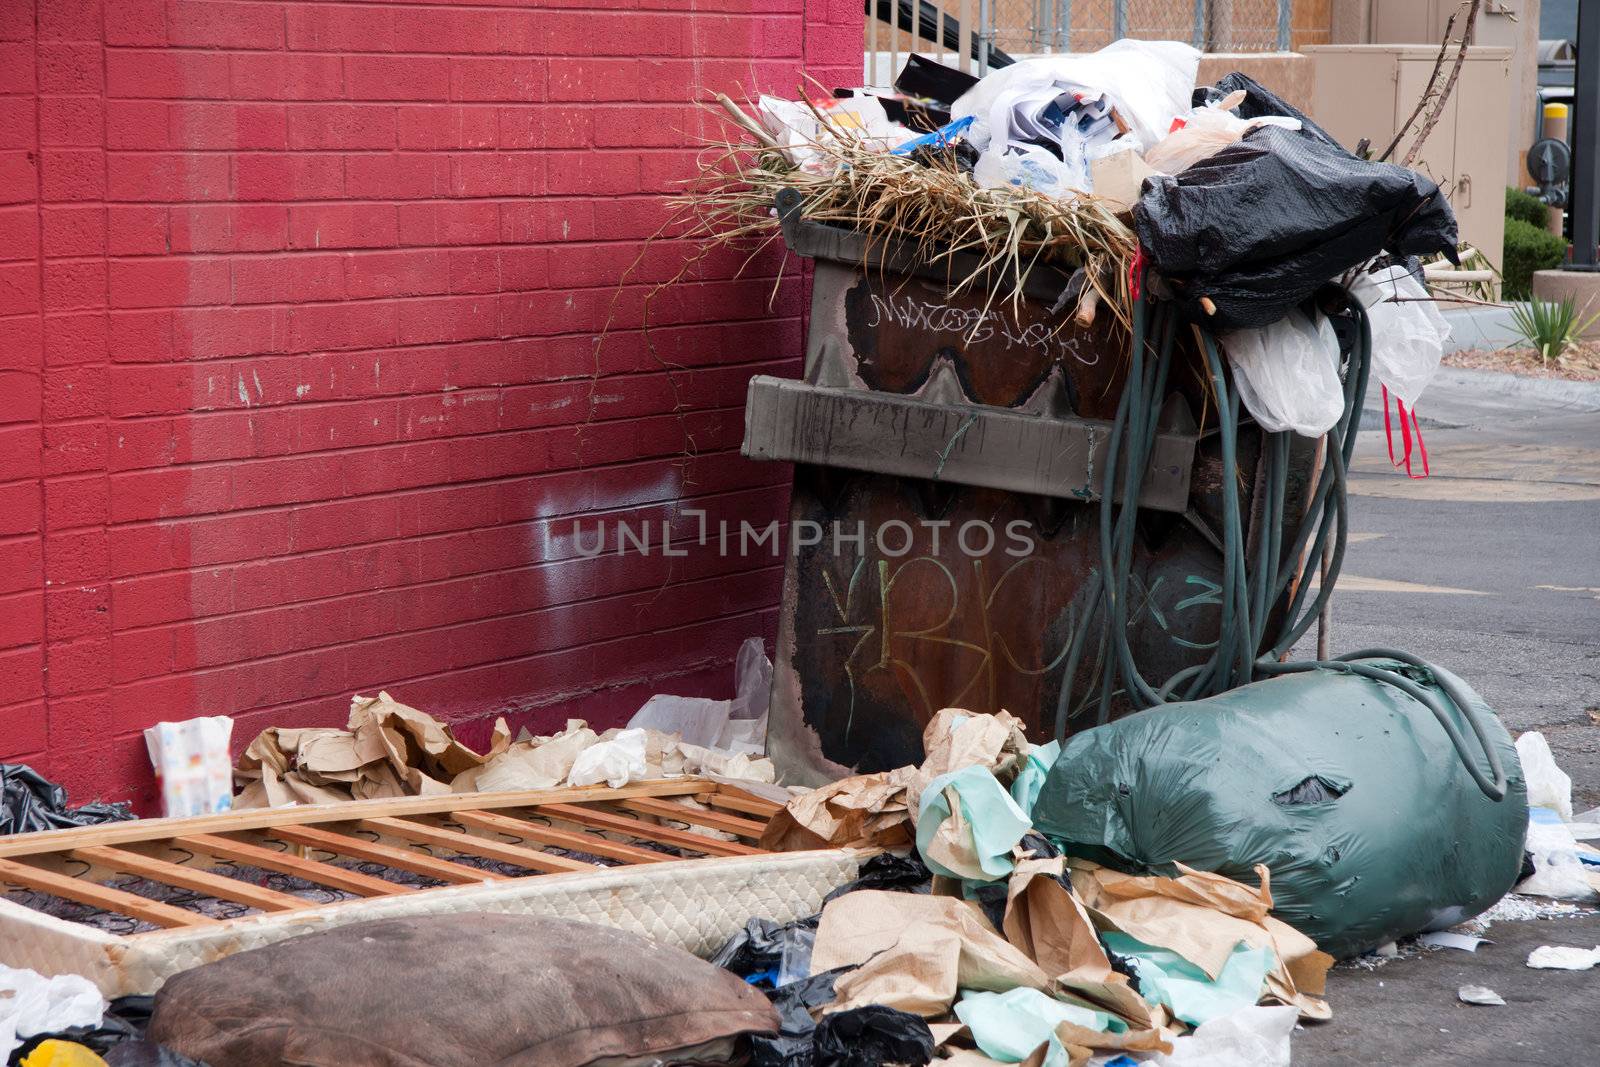 overfilled trash dumpster in ghetto neigborhood